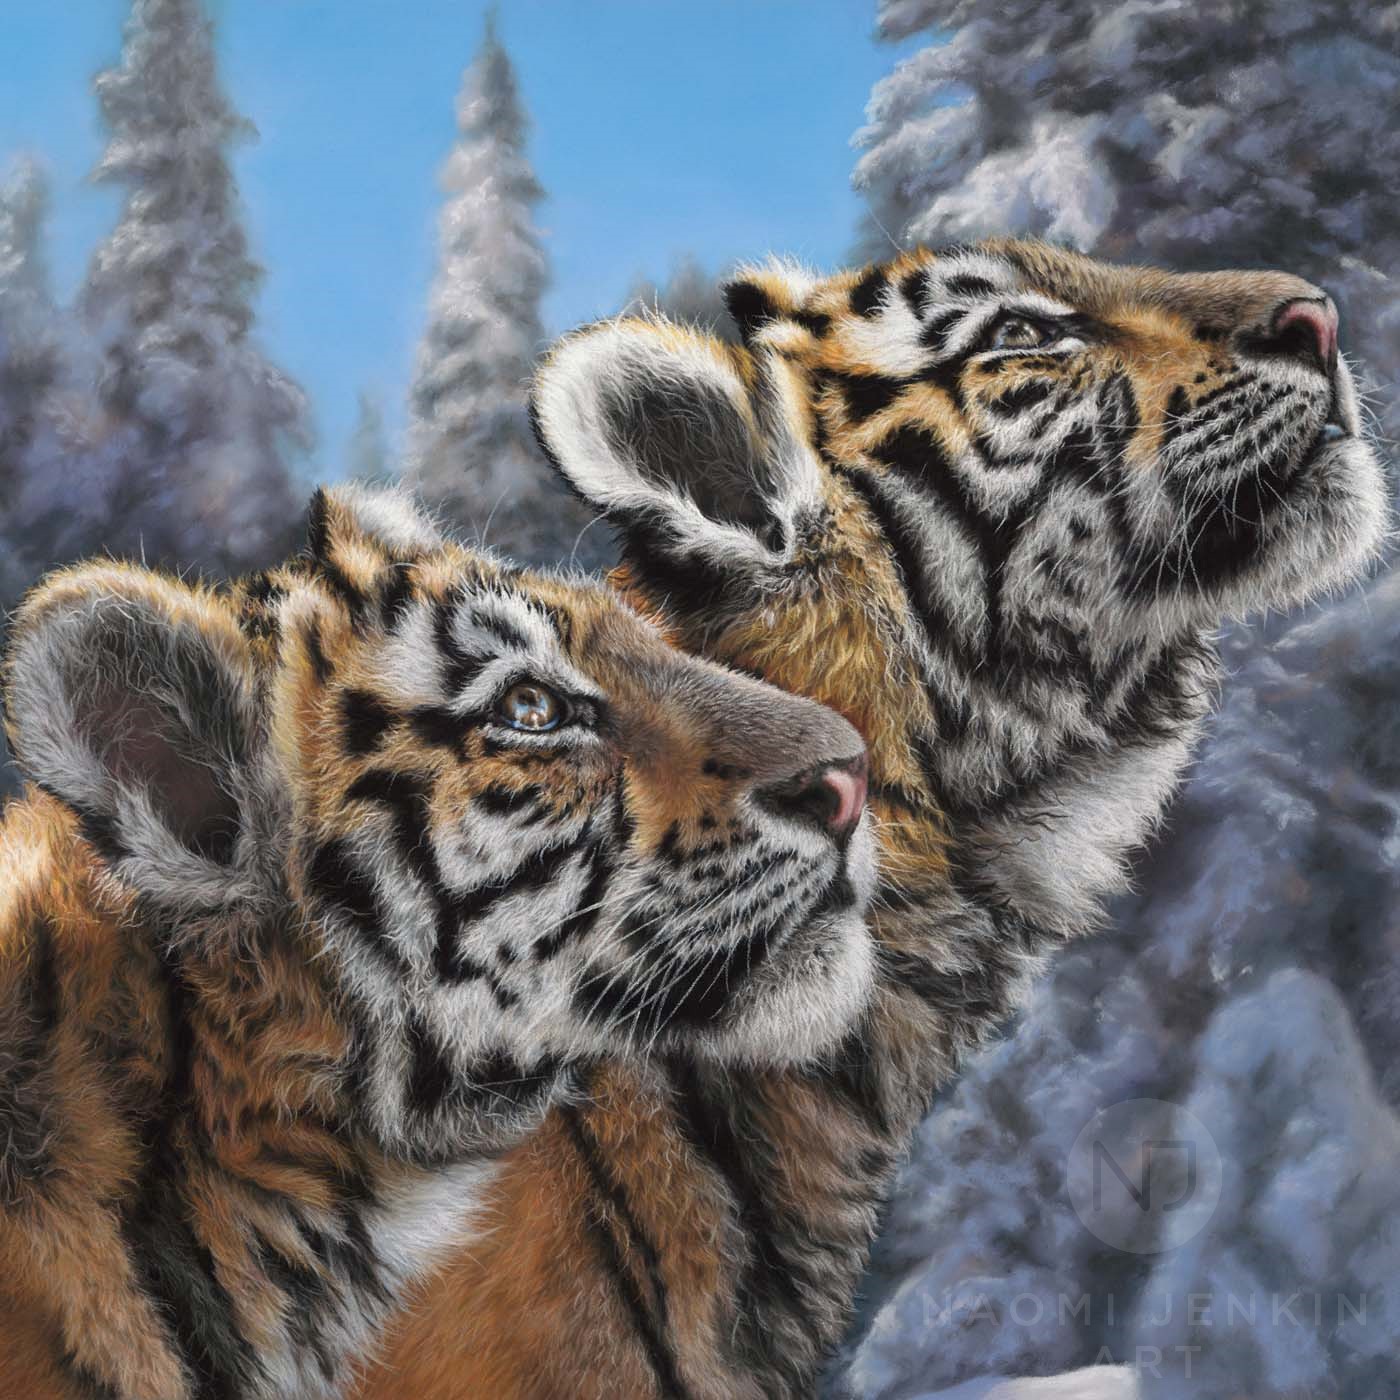 Tiger art of two Siberian tigers, hand drawn in pastels by wildlife artist Naomi Jenkin.